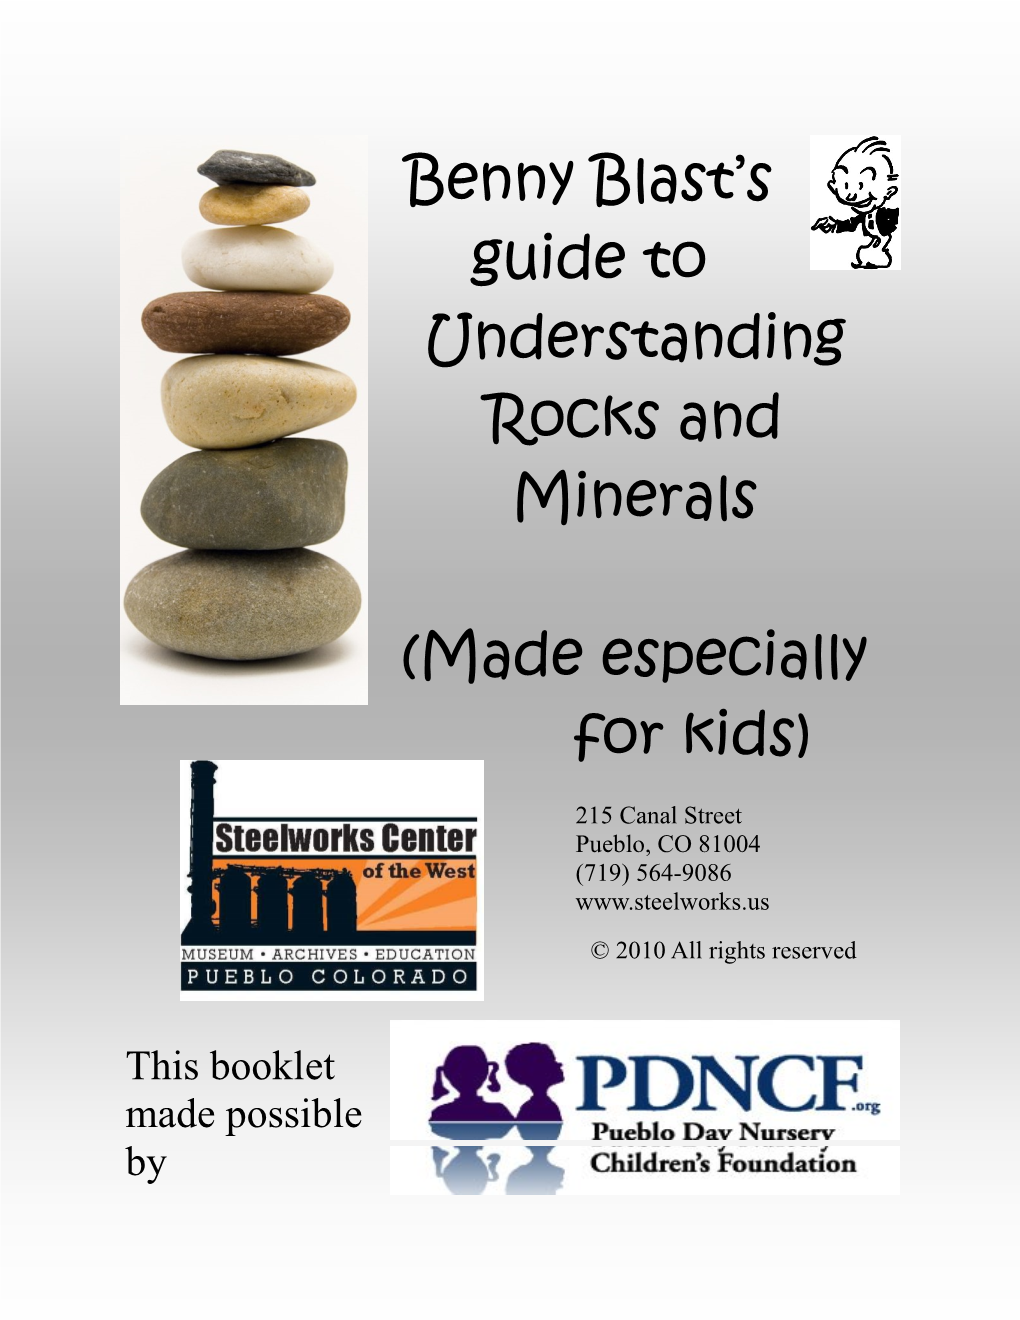 Benny Blast's Guide to Understanding Rocks and Minerals